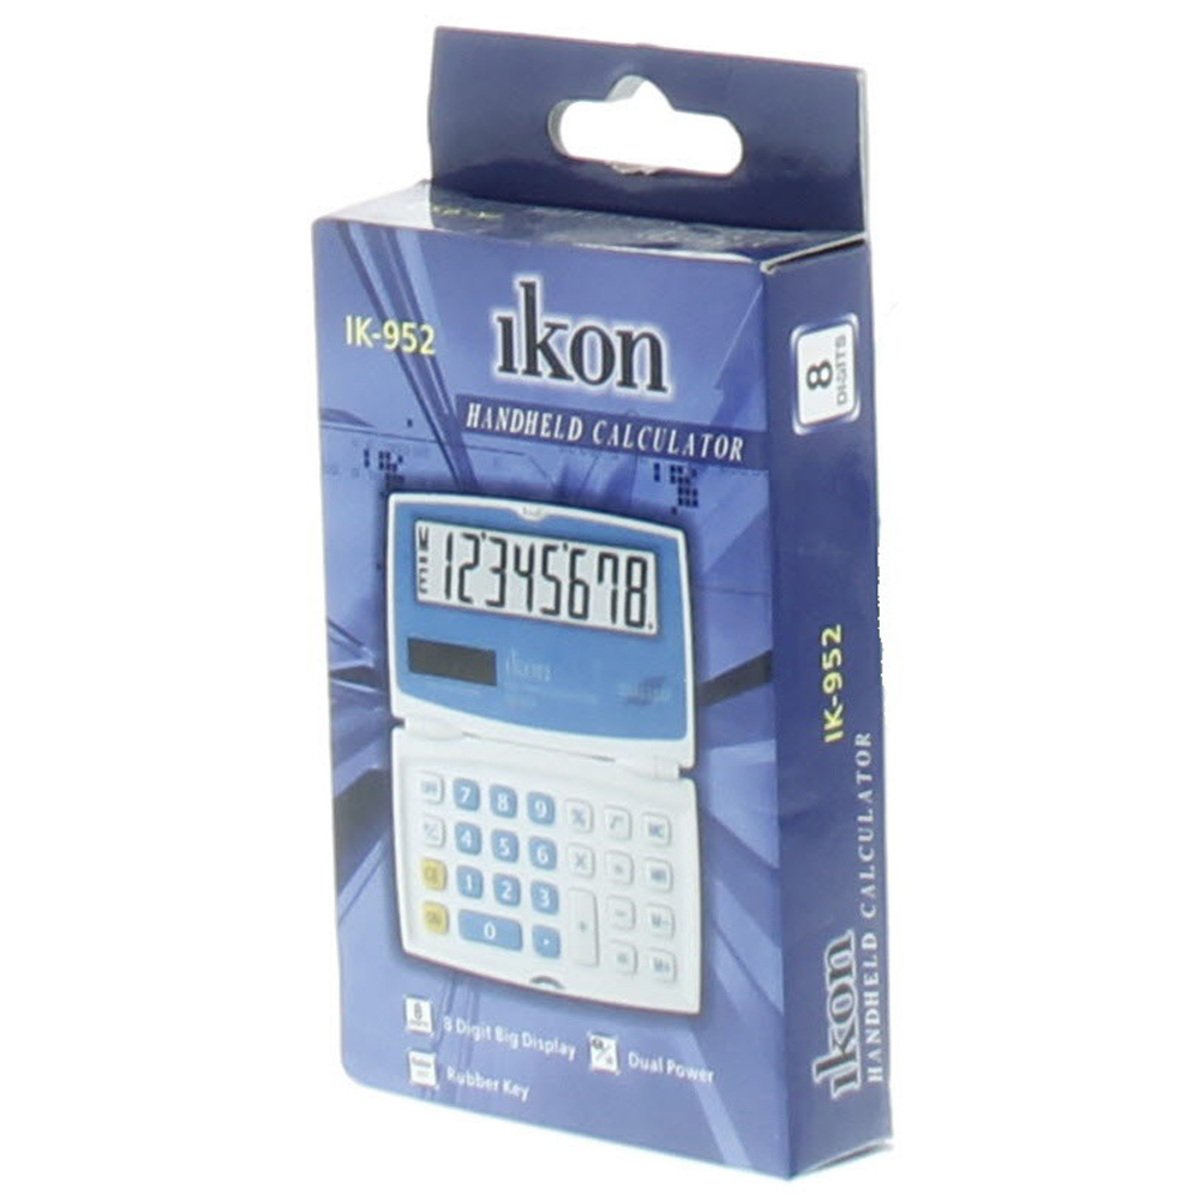 Ikon Handheld Calculator IK-952